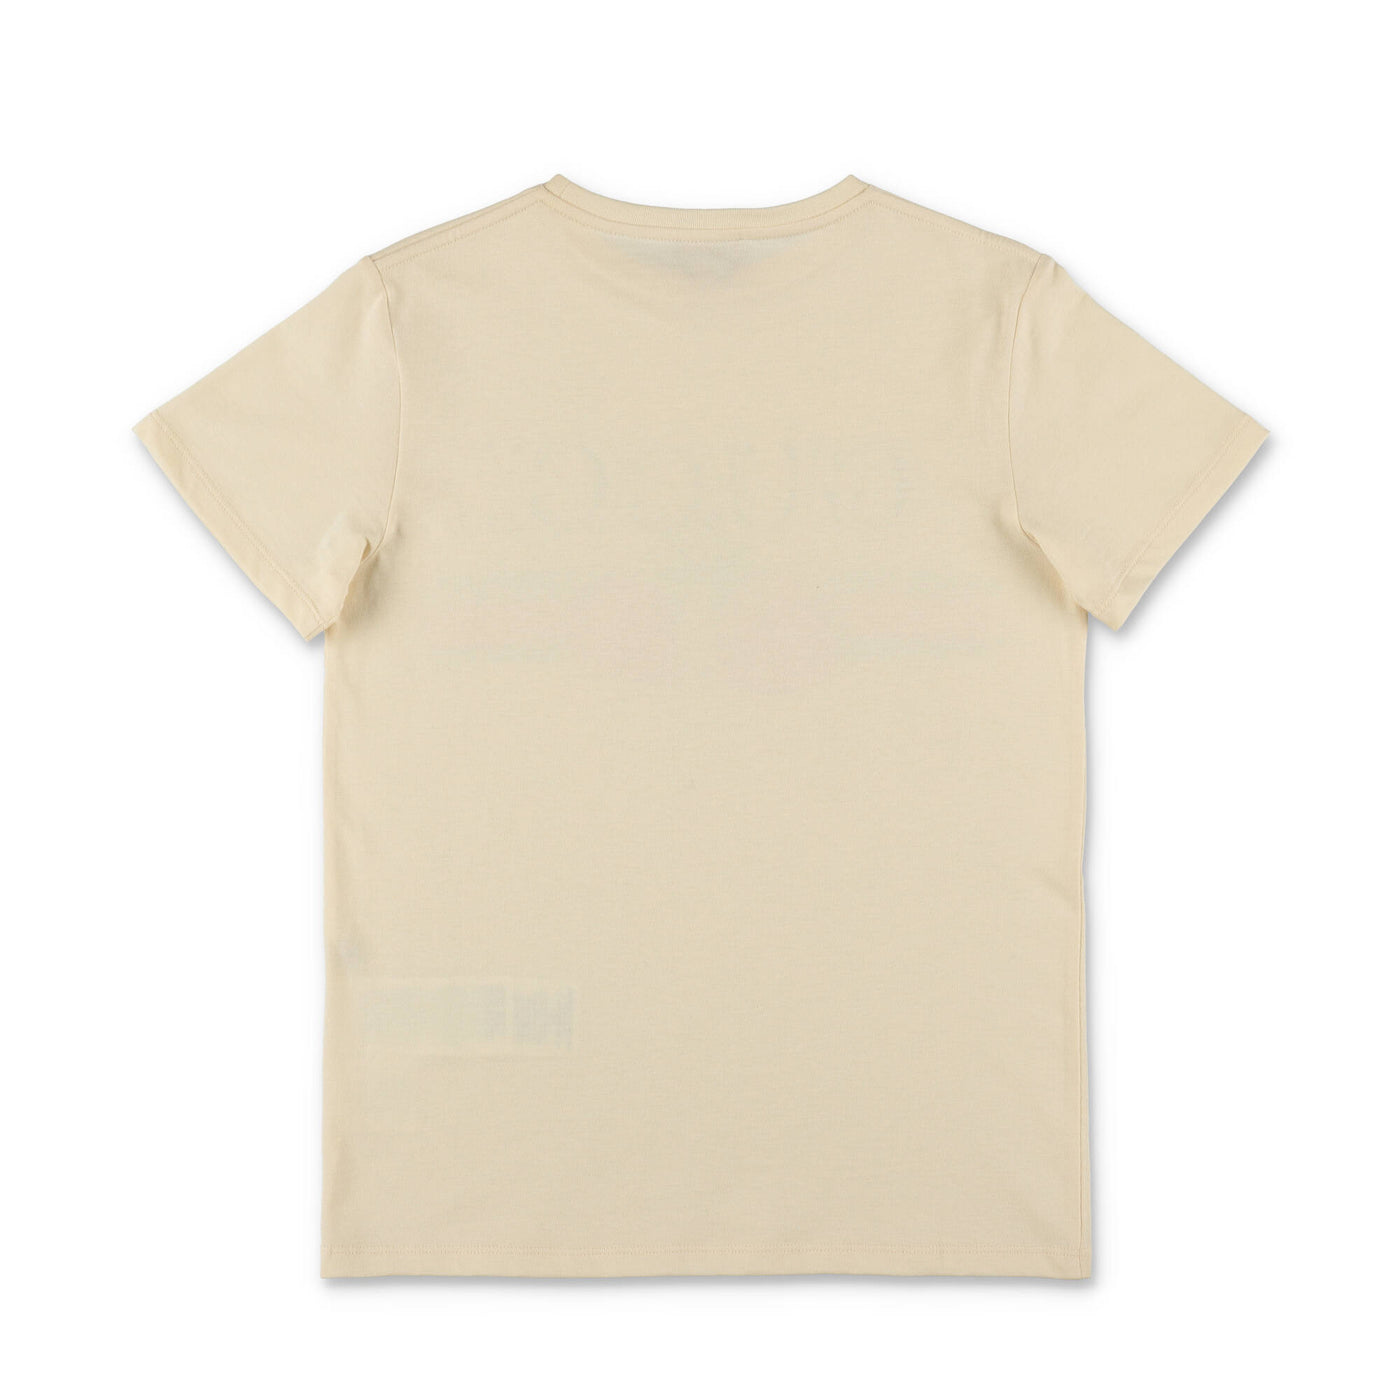 Cream cotton jersey girl GUCCI t-shirt